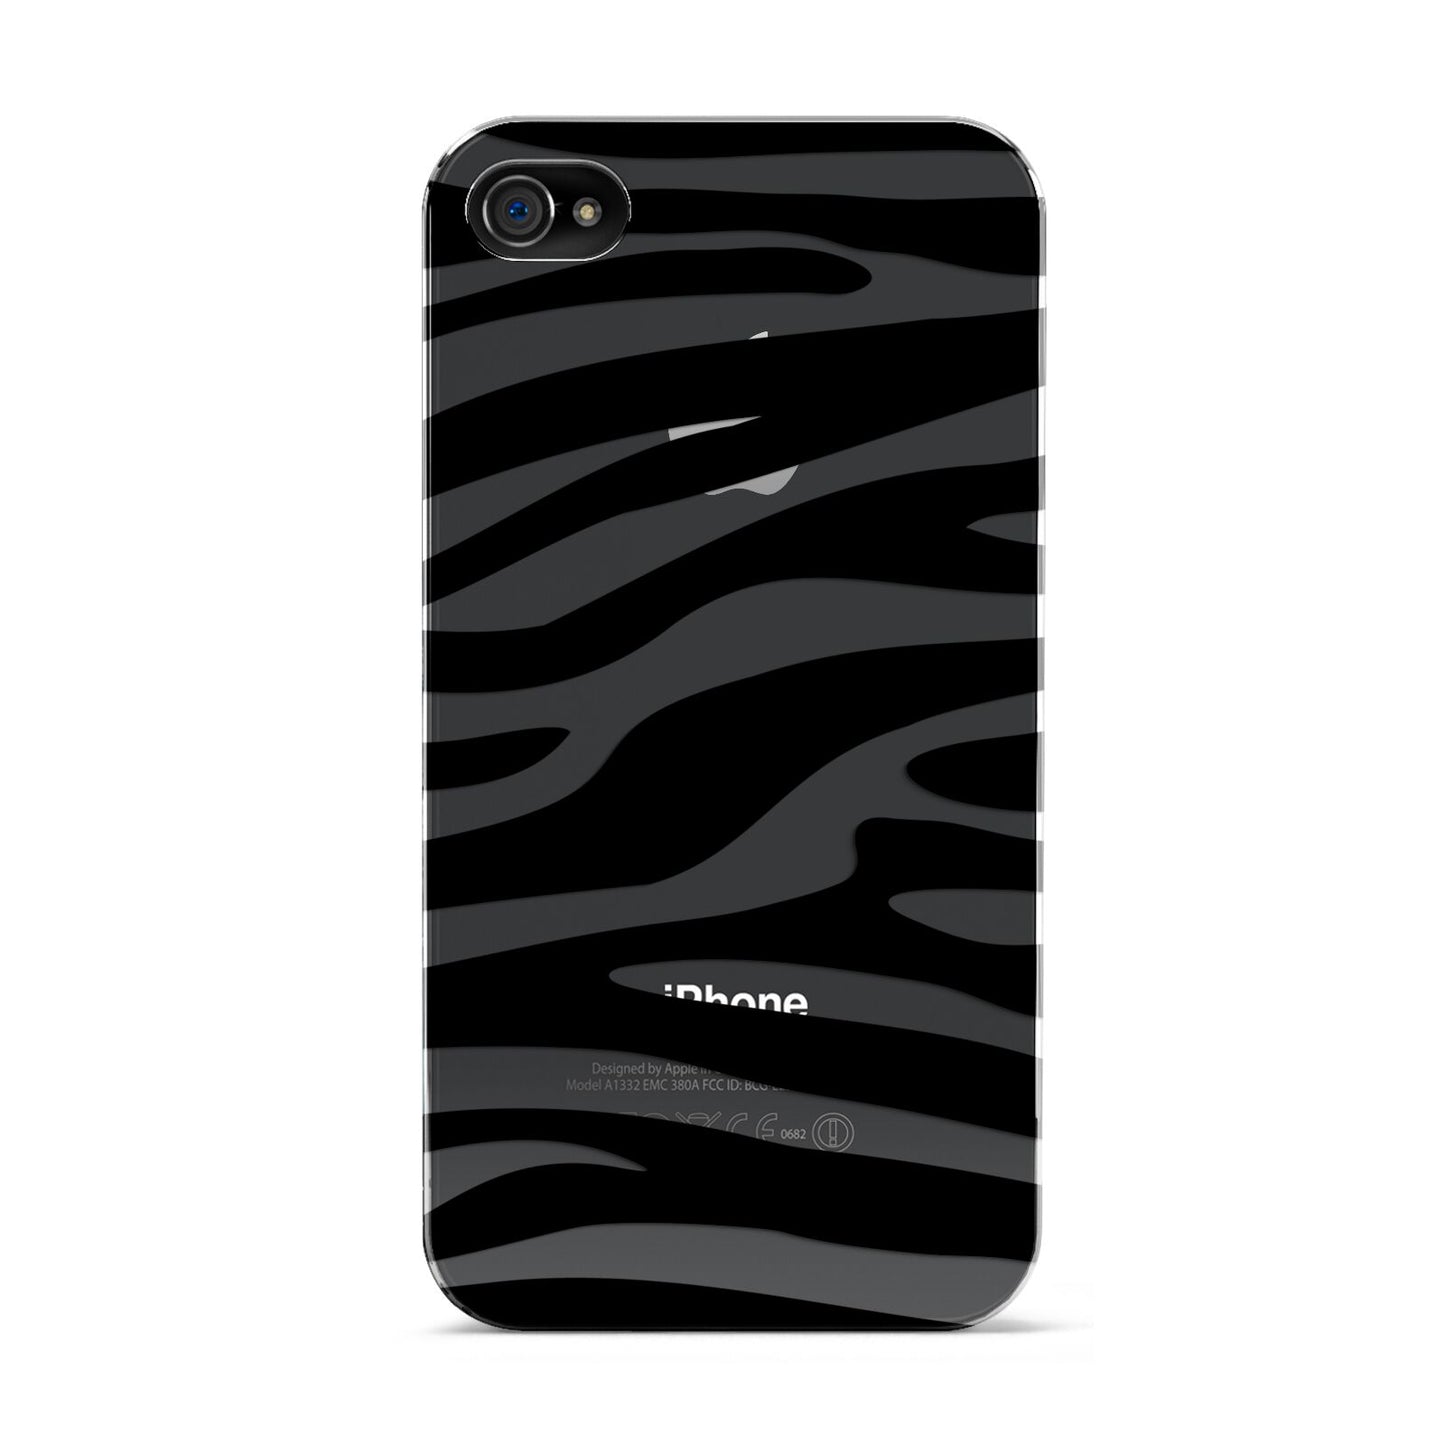 Zebra Print Apple iPhone 4s Case